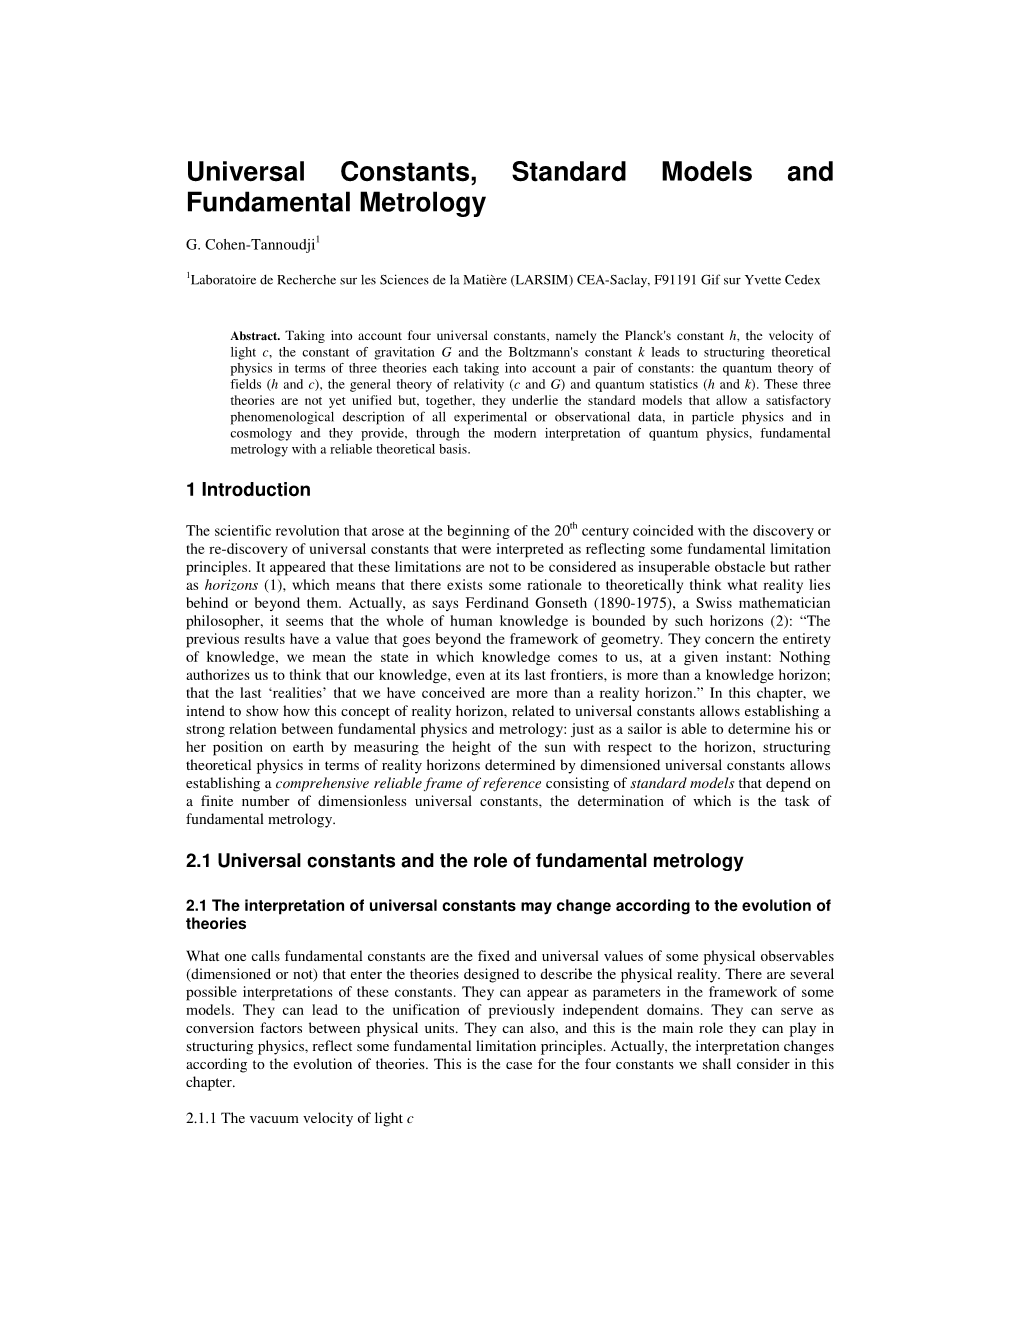 Universal Constants, Standard Models and Fundamental Metrology